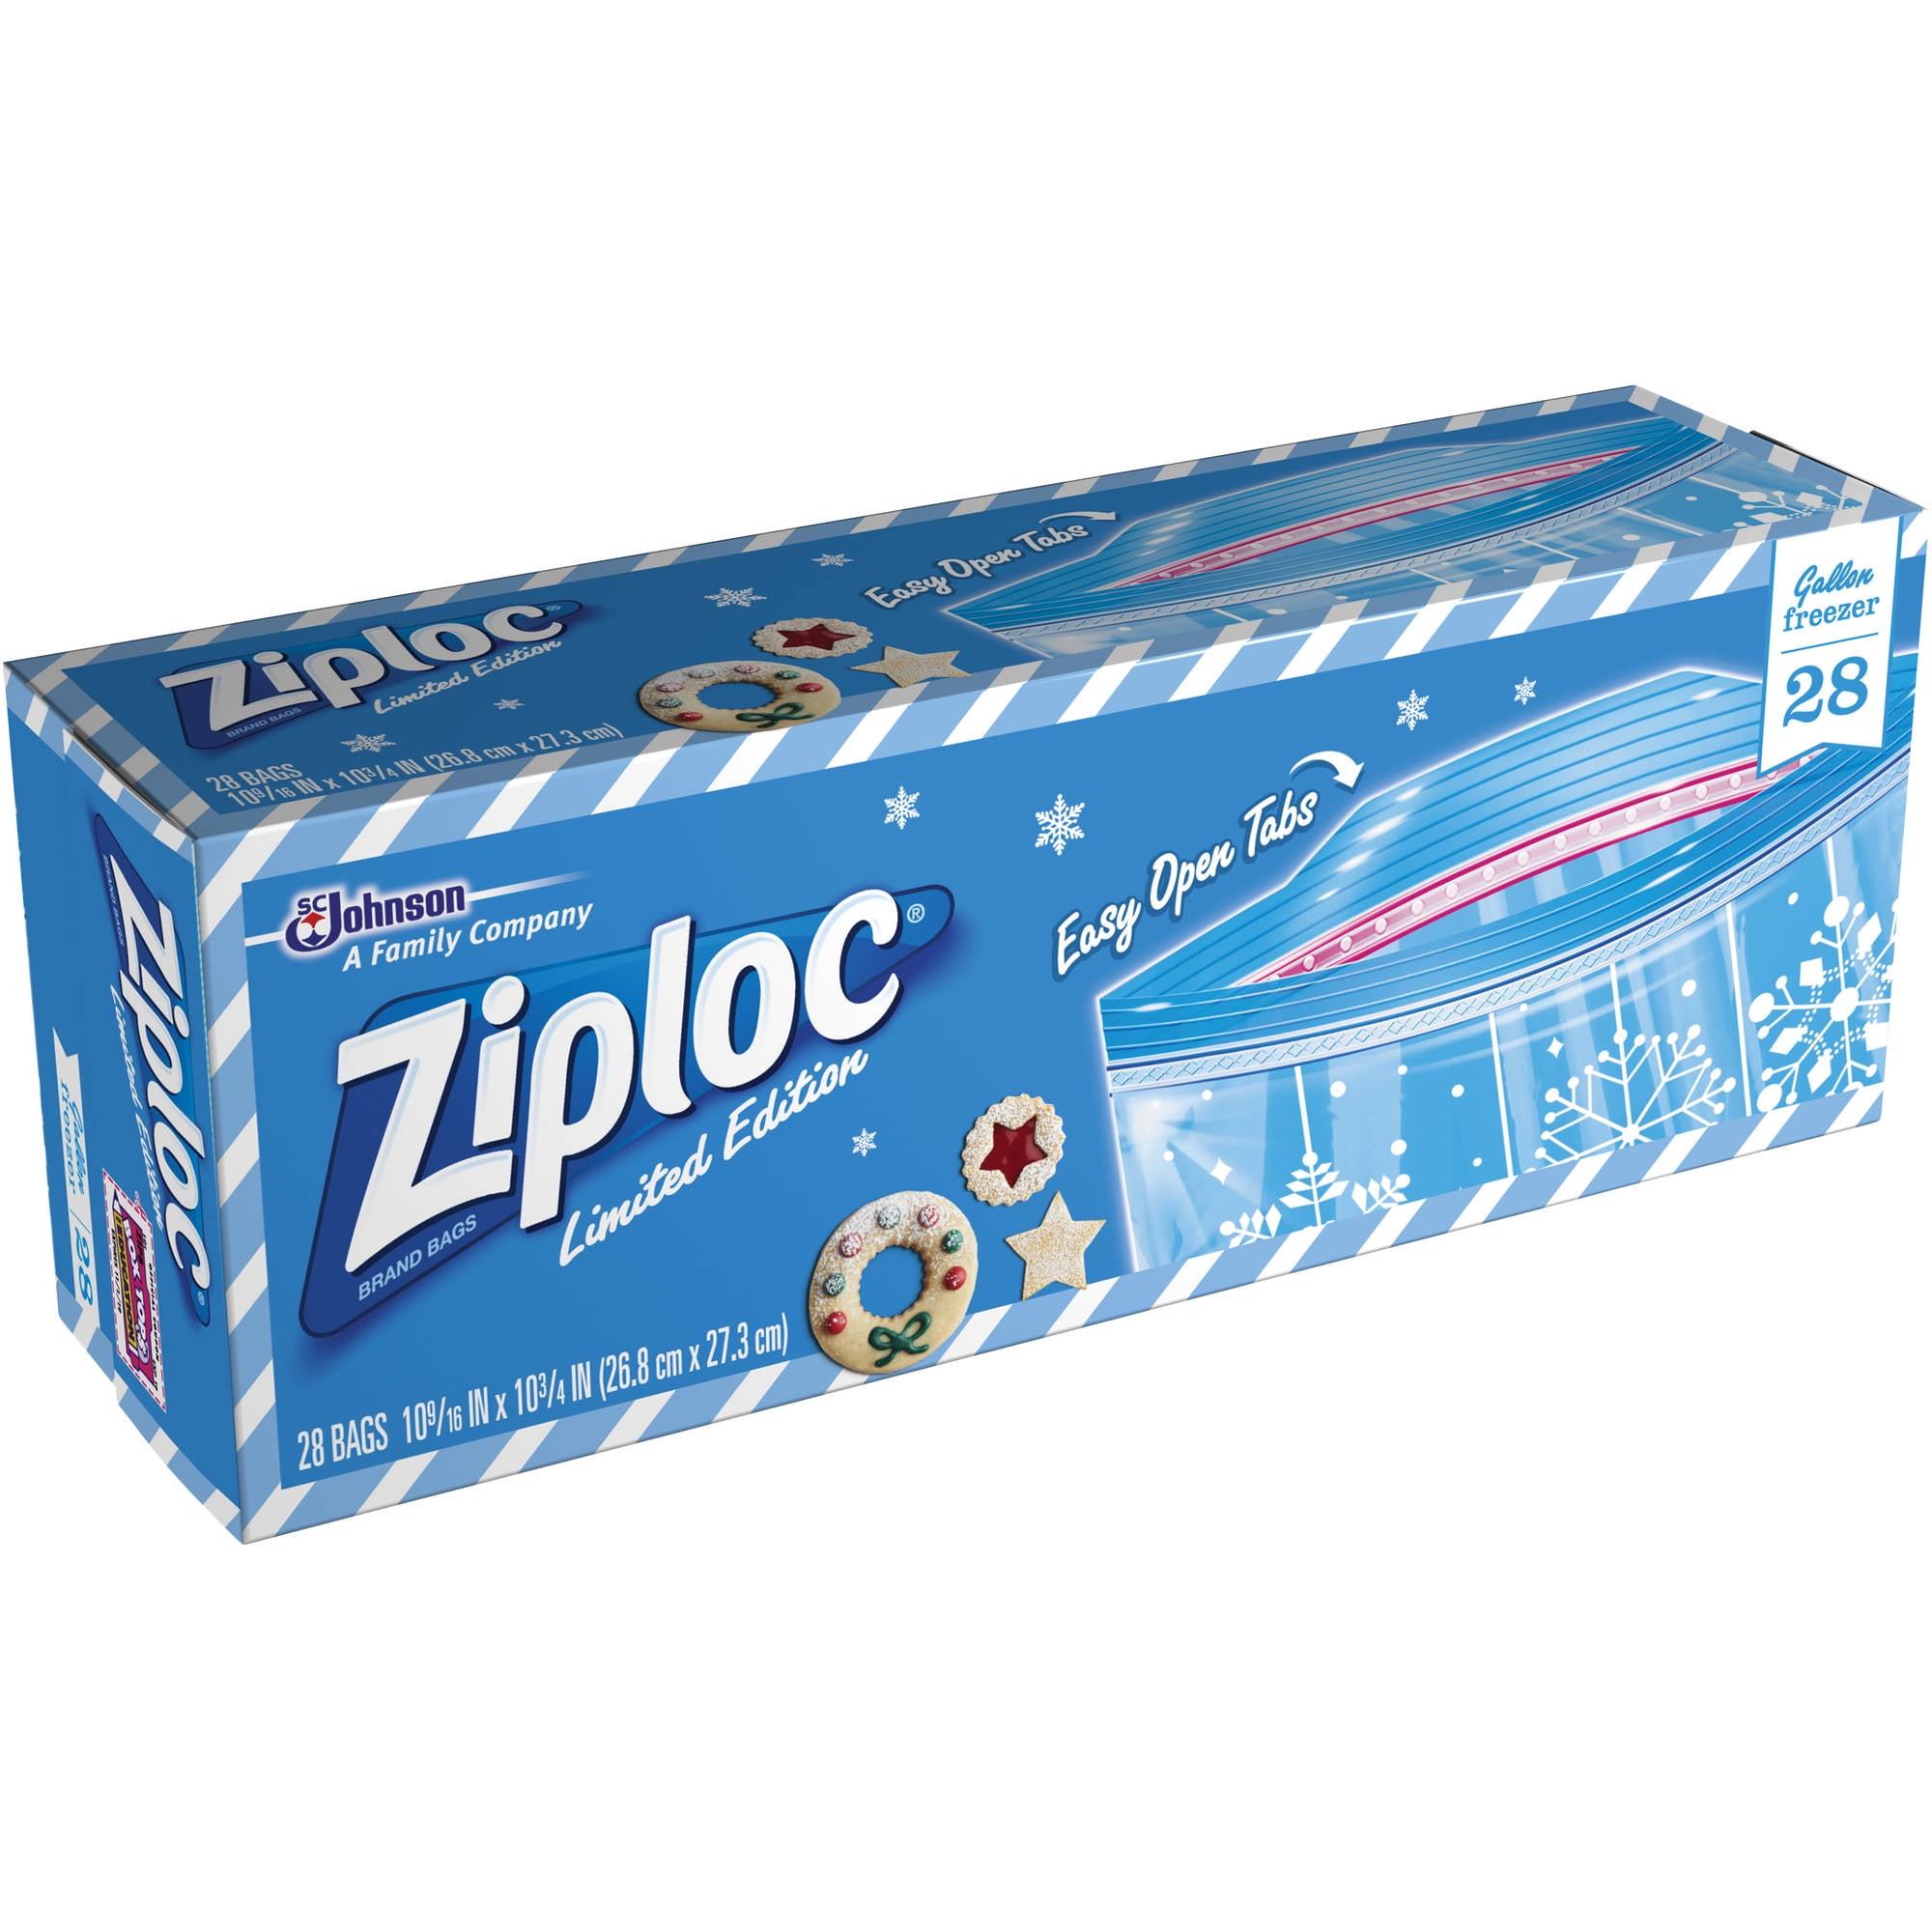 Ziploc 19-Count Holiday Storage Gallon Bag - 71524